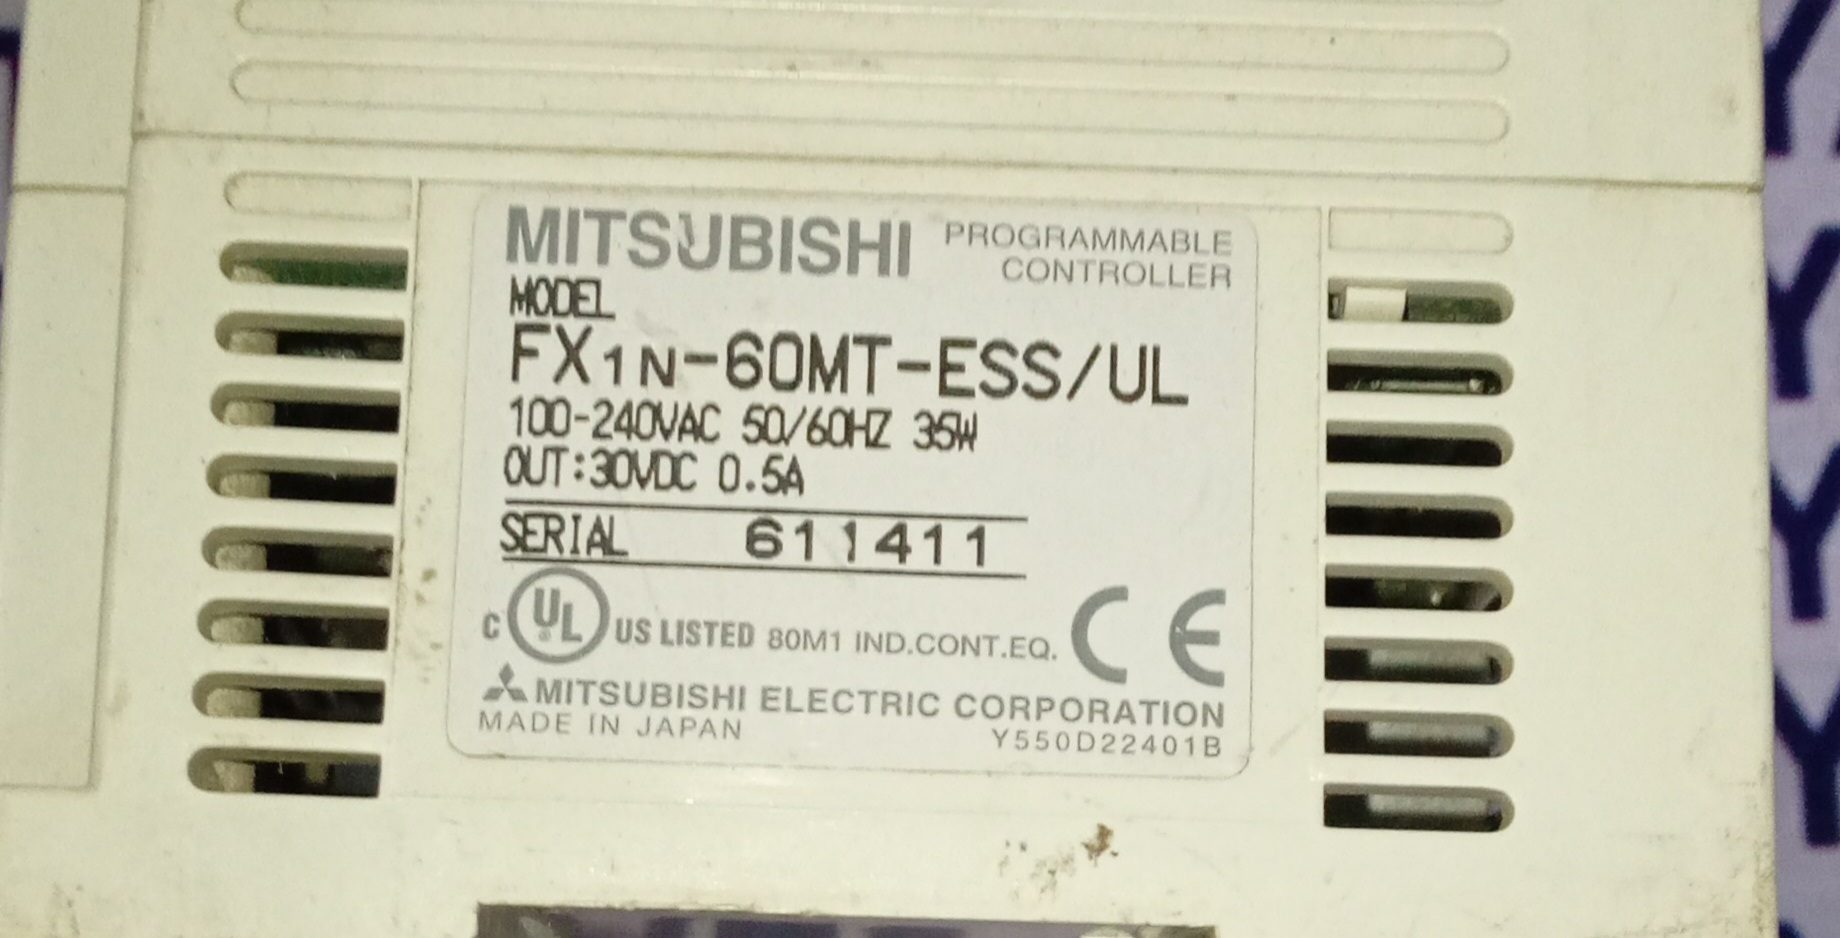 MITSUBISHI PROGRAMMABLE CONTROLLER   FX1N-60MT-ESS/UL